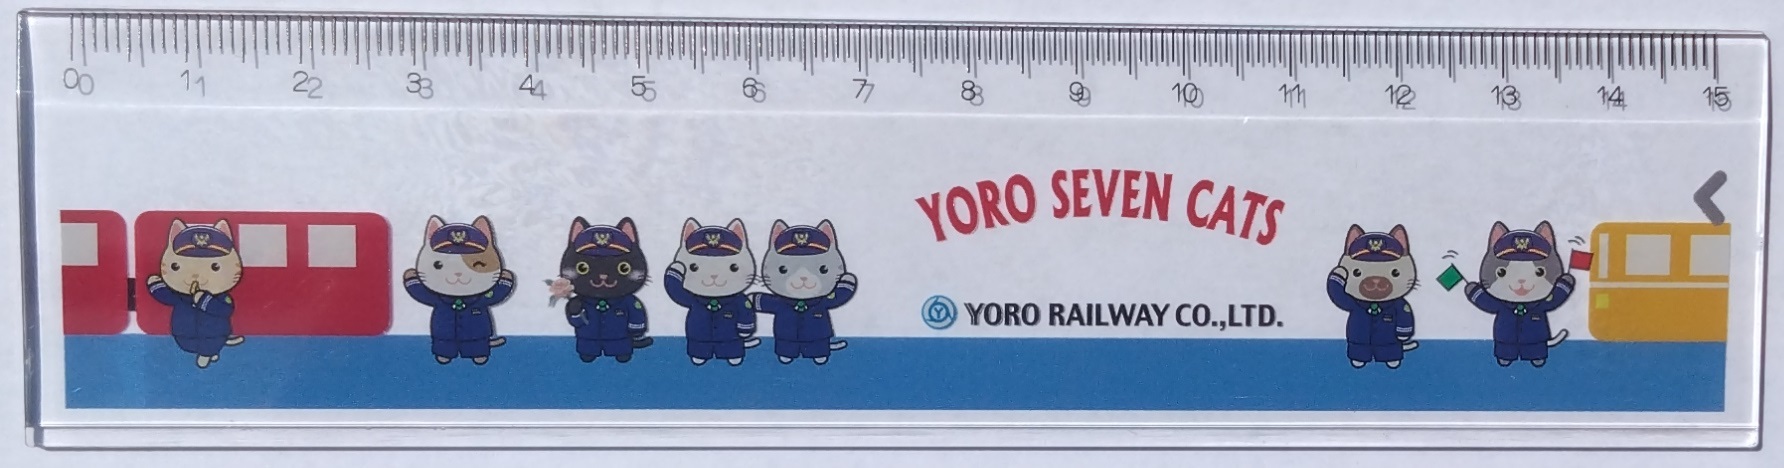 YORO SEVEN CATS 定規